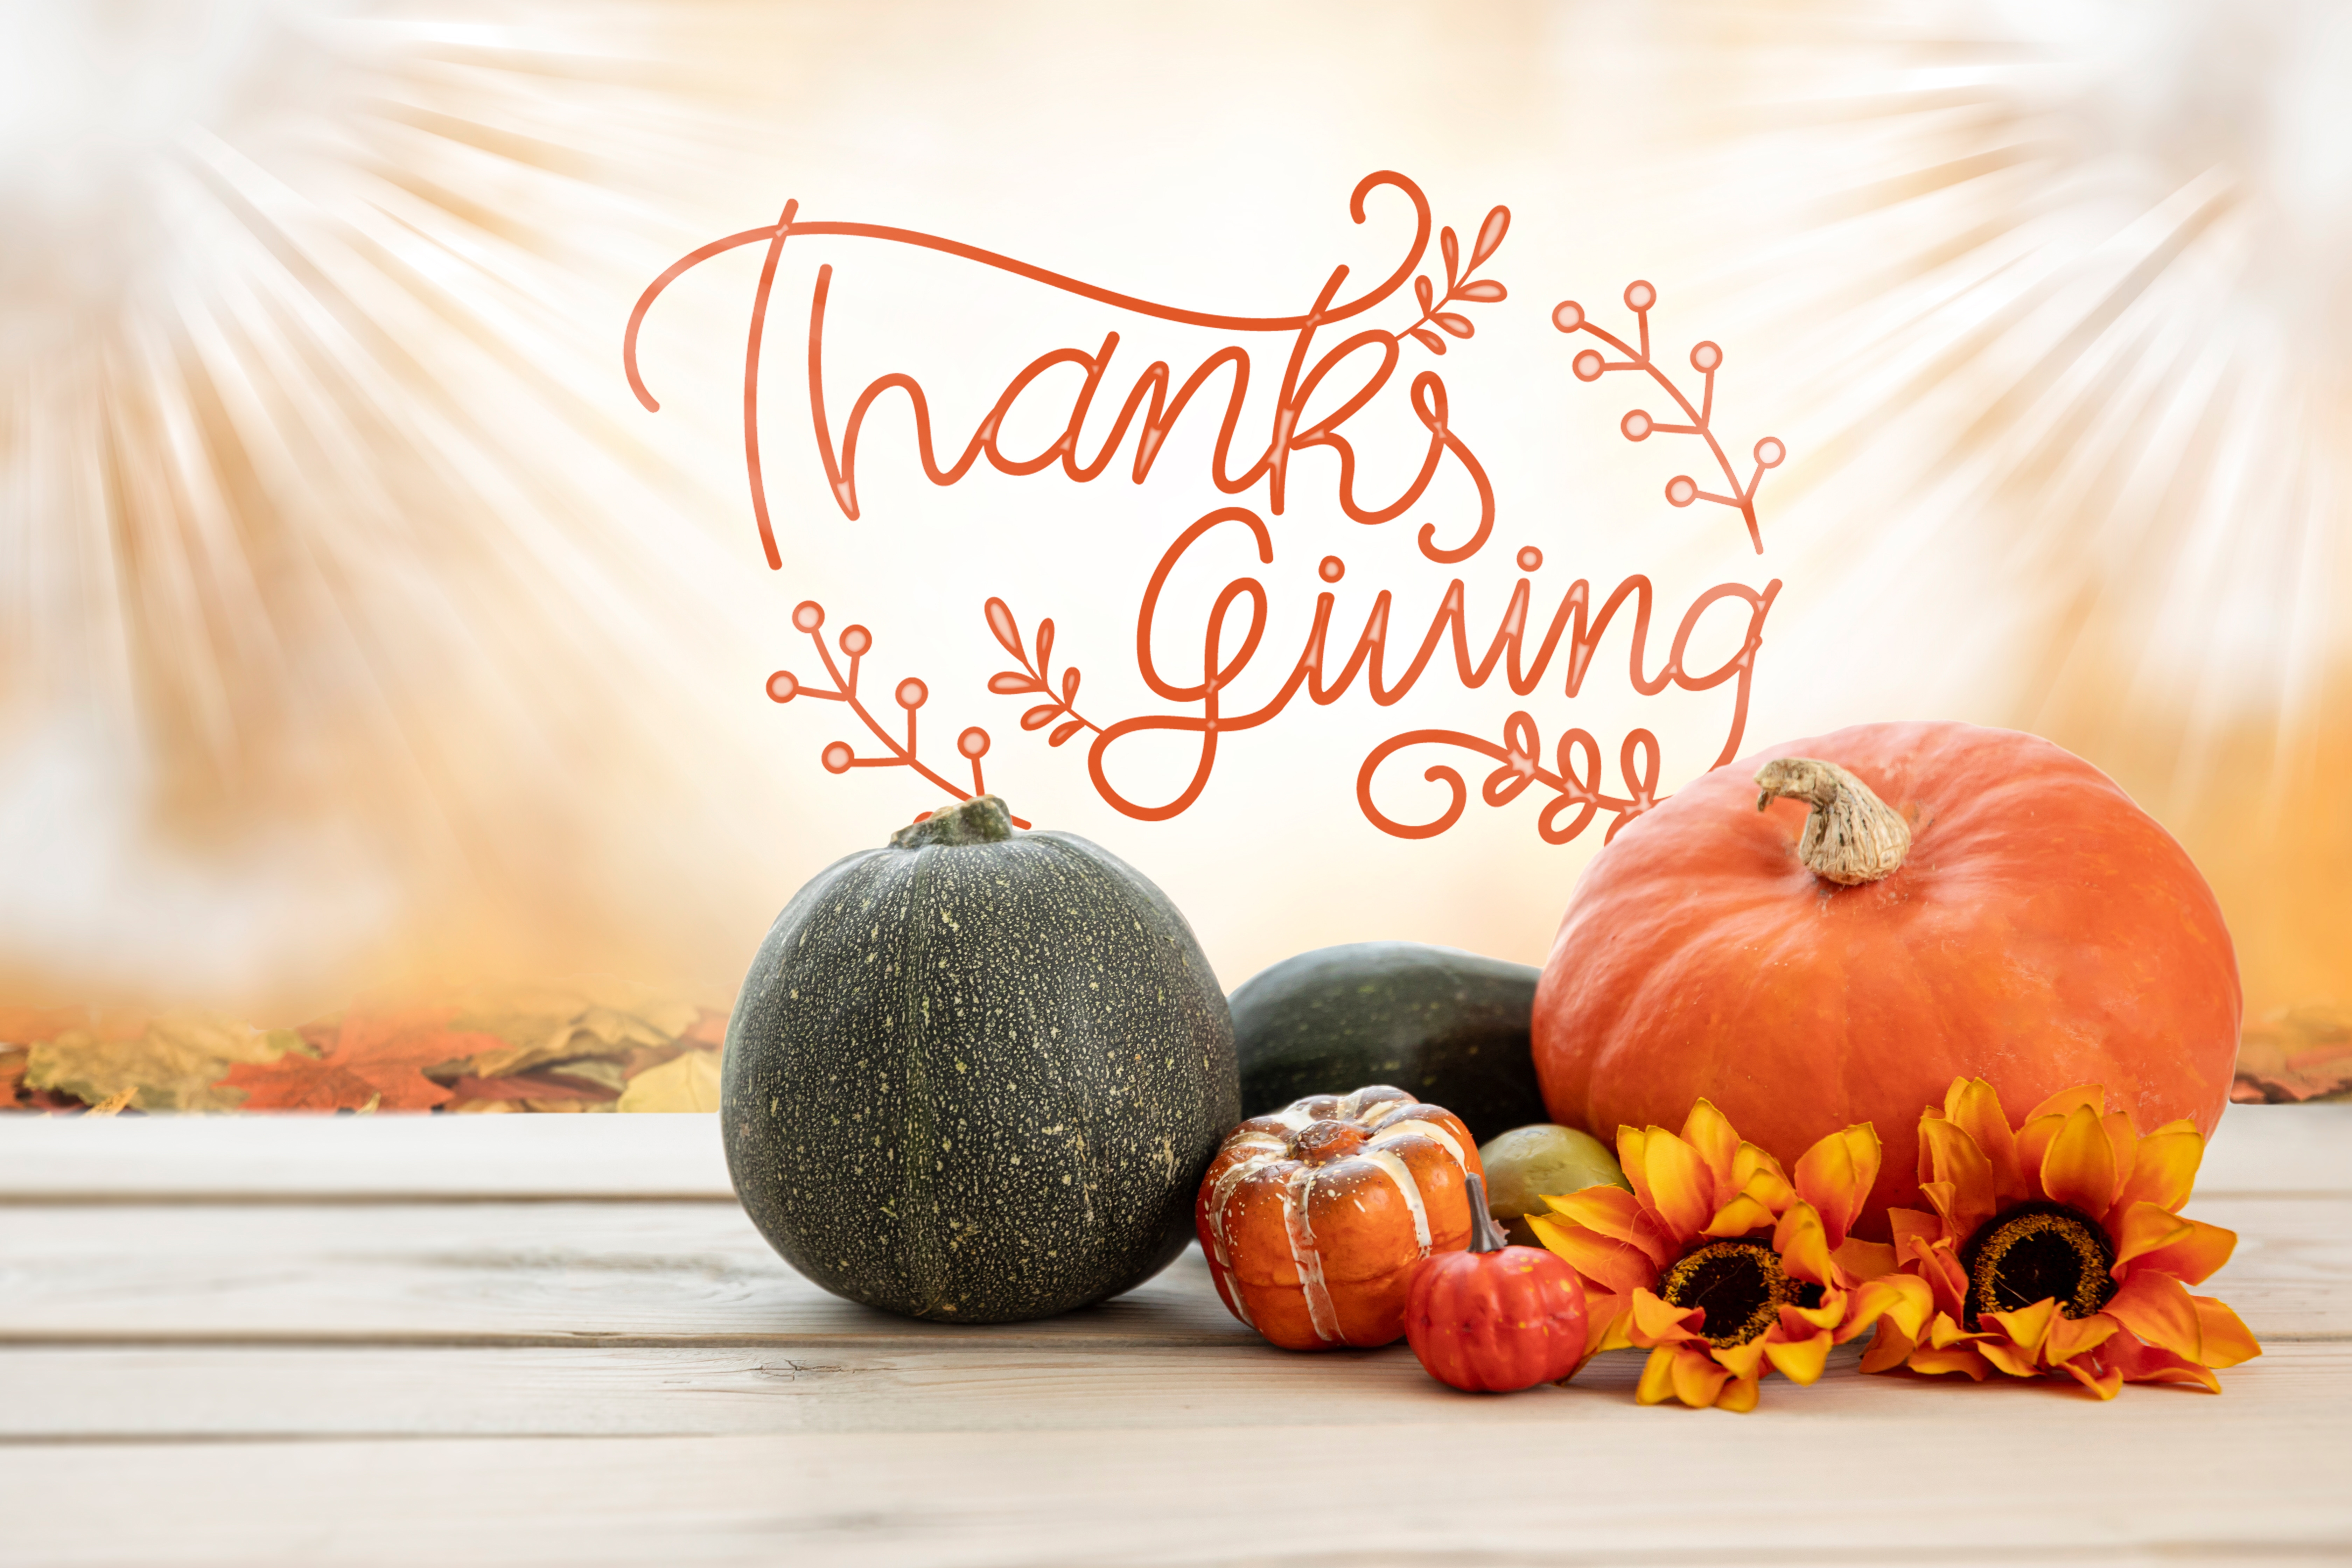 HD wallpaper, Wooden Floor, Thanksgiving Day, Happy Thanksgiving, Sunflowers, Pumpkins